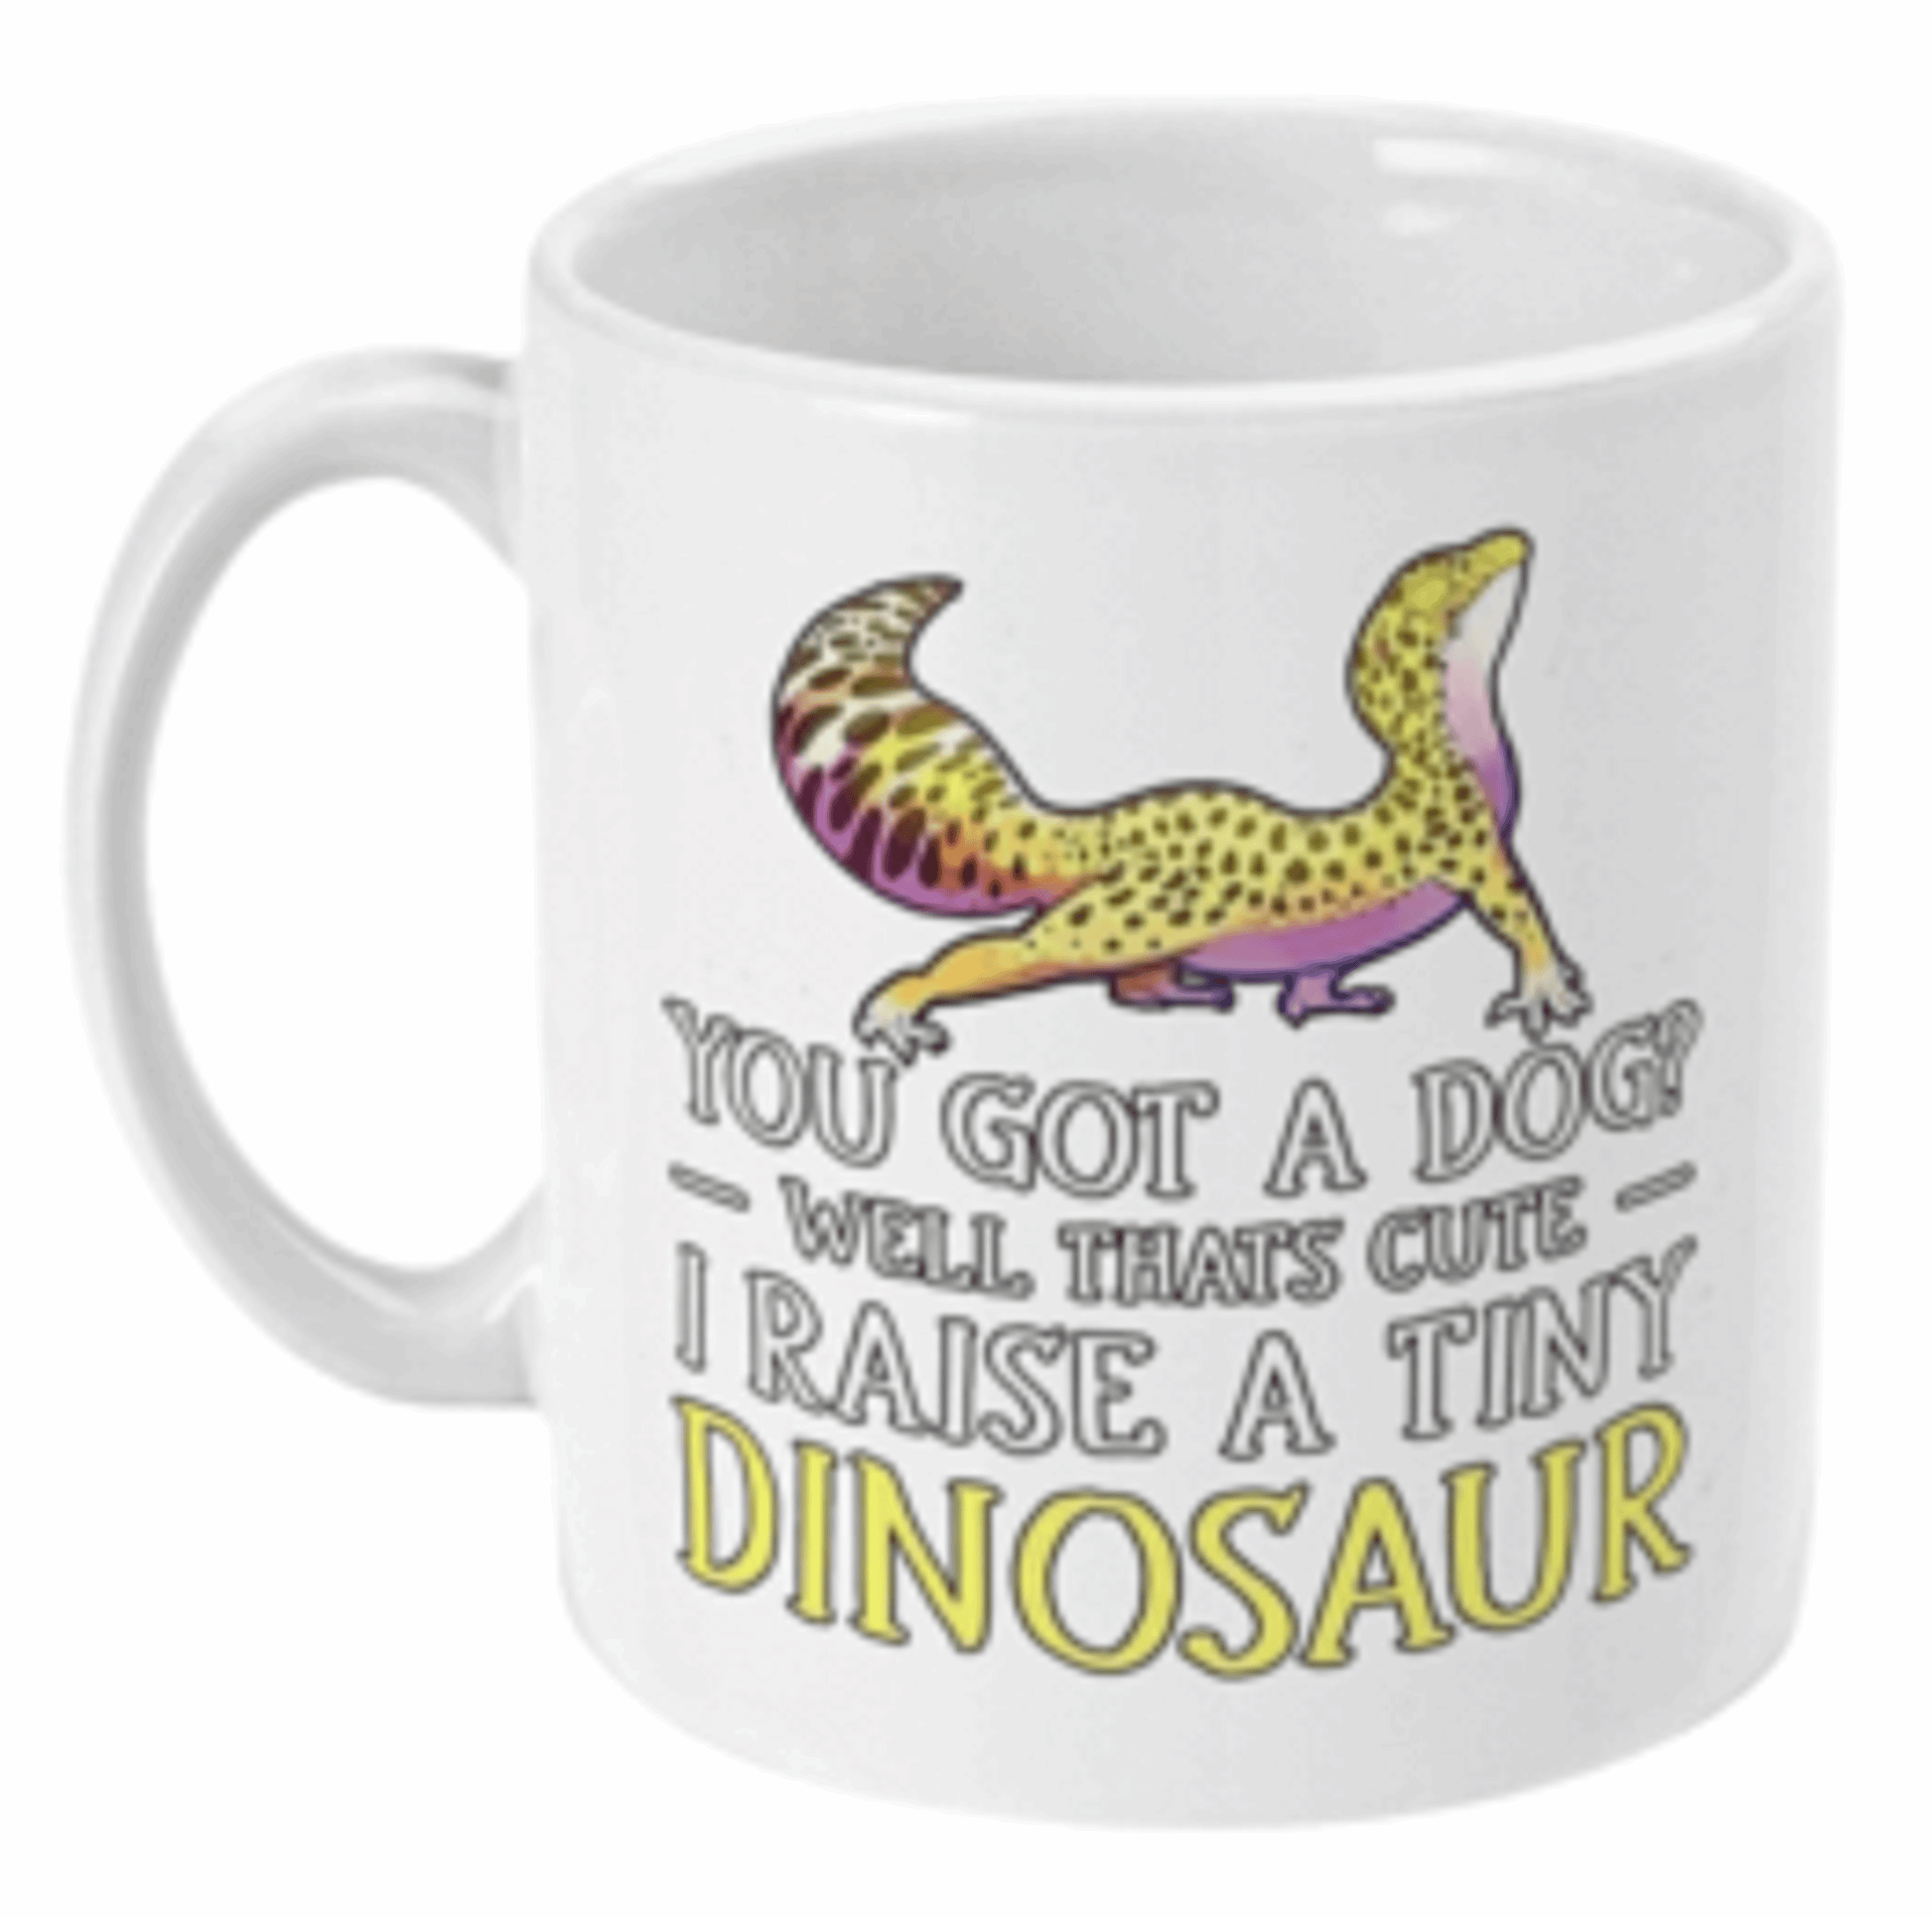  Raising a Tiny Dinosaur Funny Coffee Mug by Free Spirit Accessories sold by Free Spirit Accessories